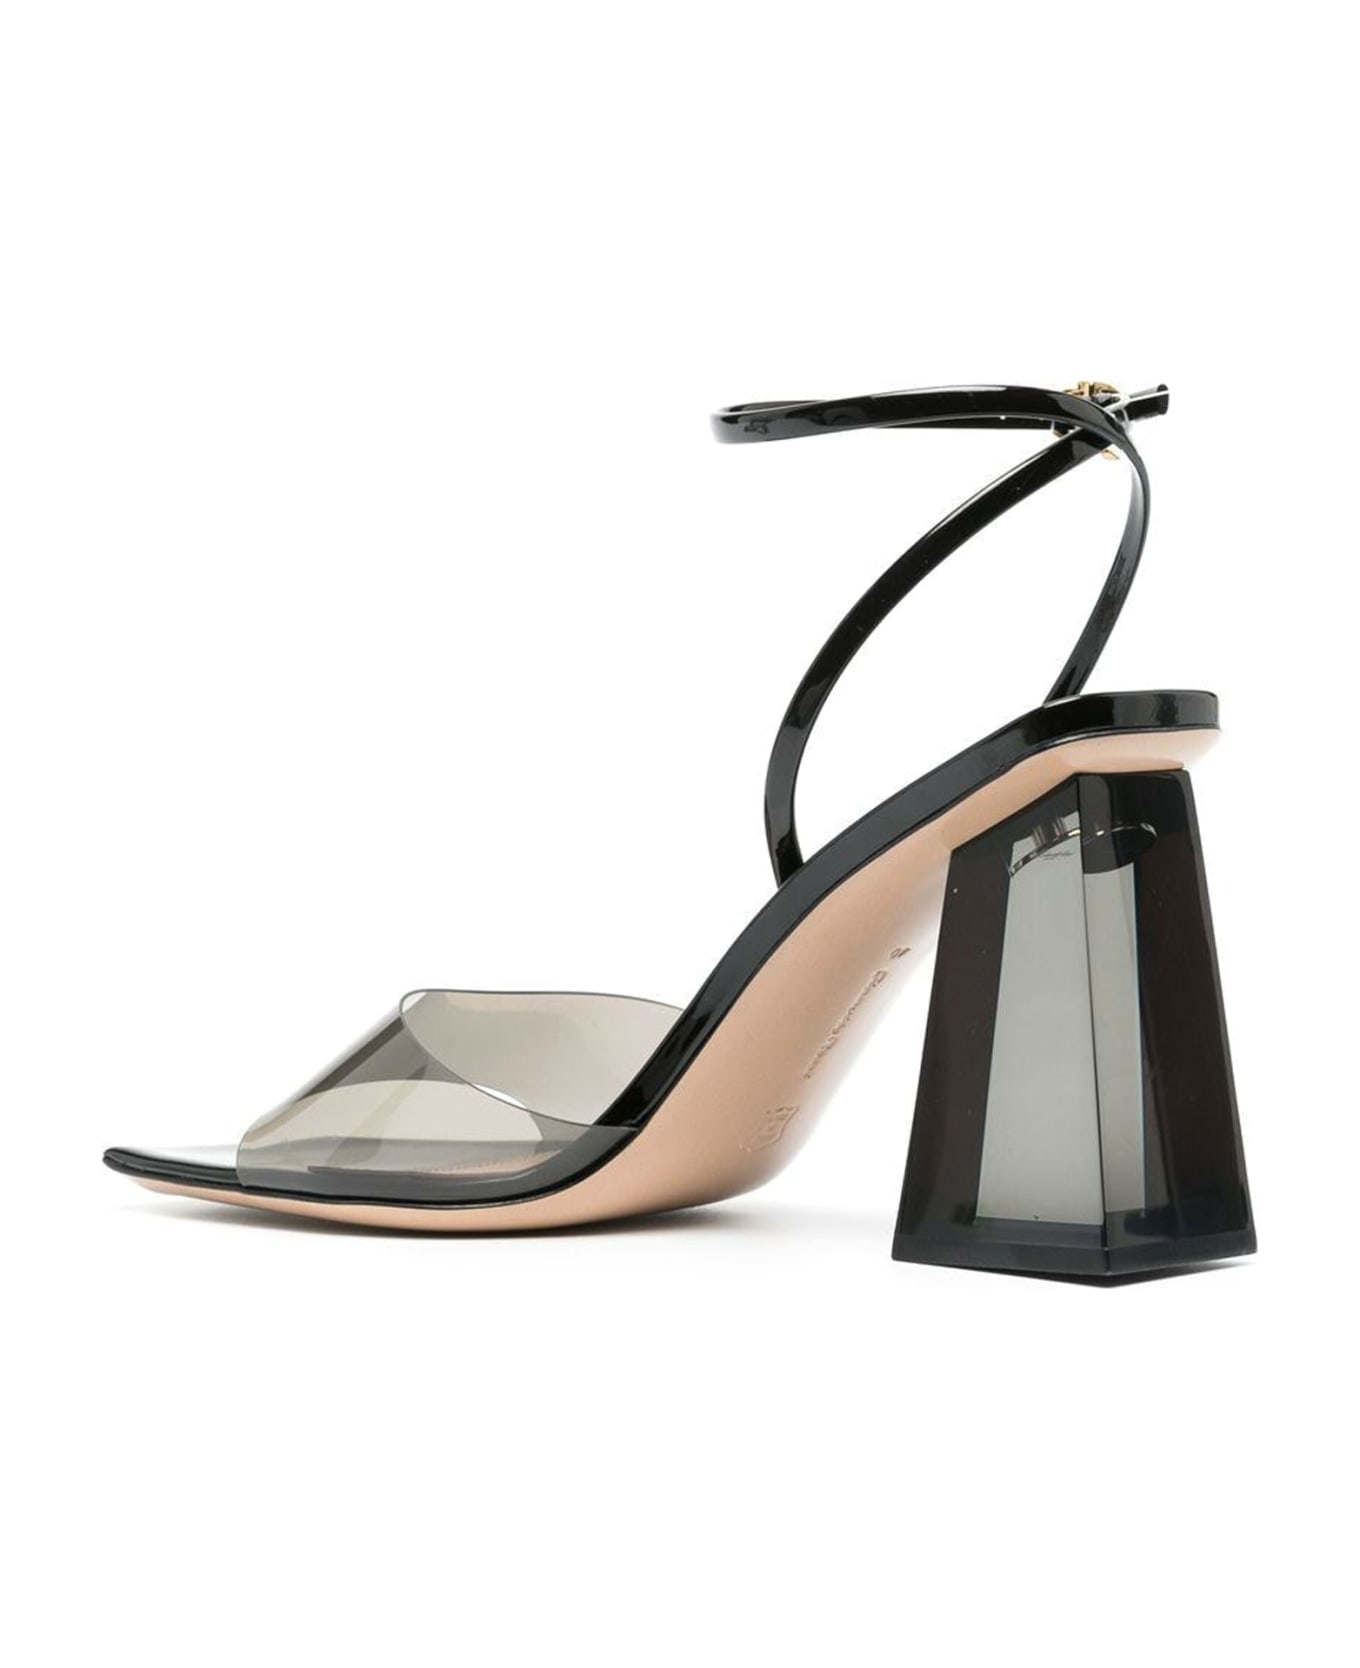 Gianvito Rossi Cosmic Sandal 85 Glass+vernice - Essential summer sandals